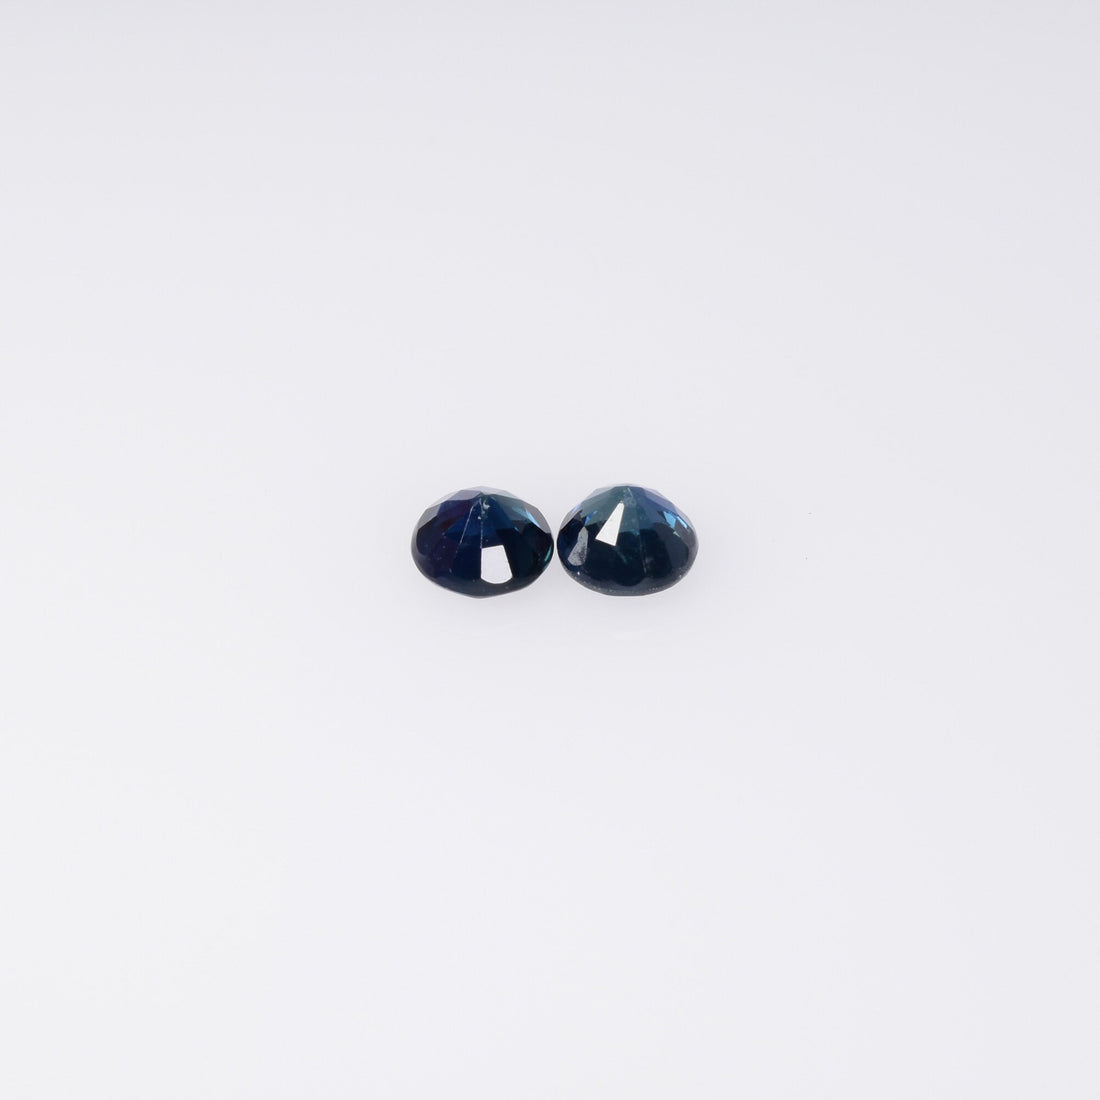 3.3-4.0 mm Natural Blue Sapphire Loose Pair Gemstone Round Cut